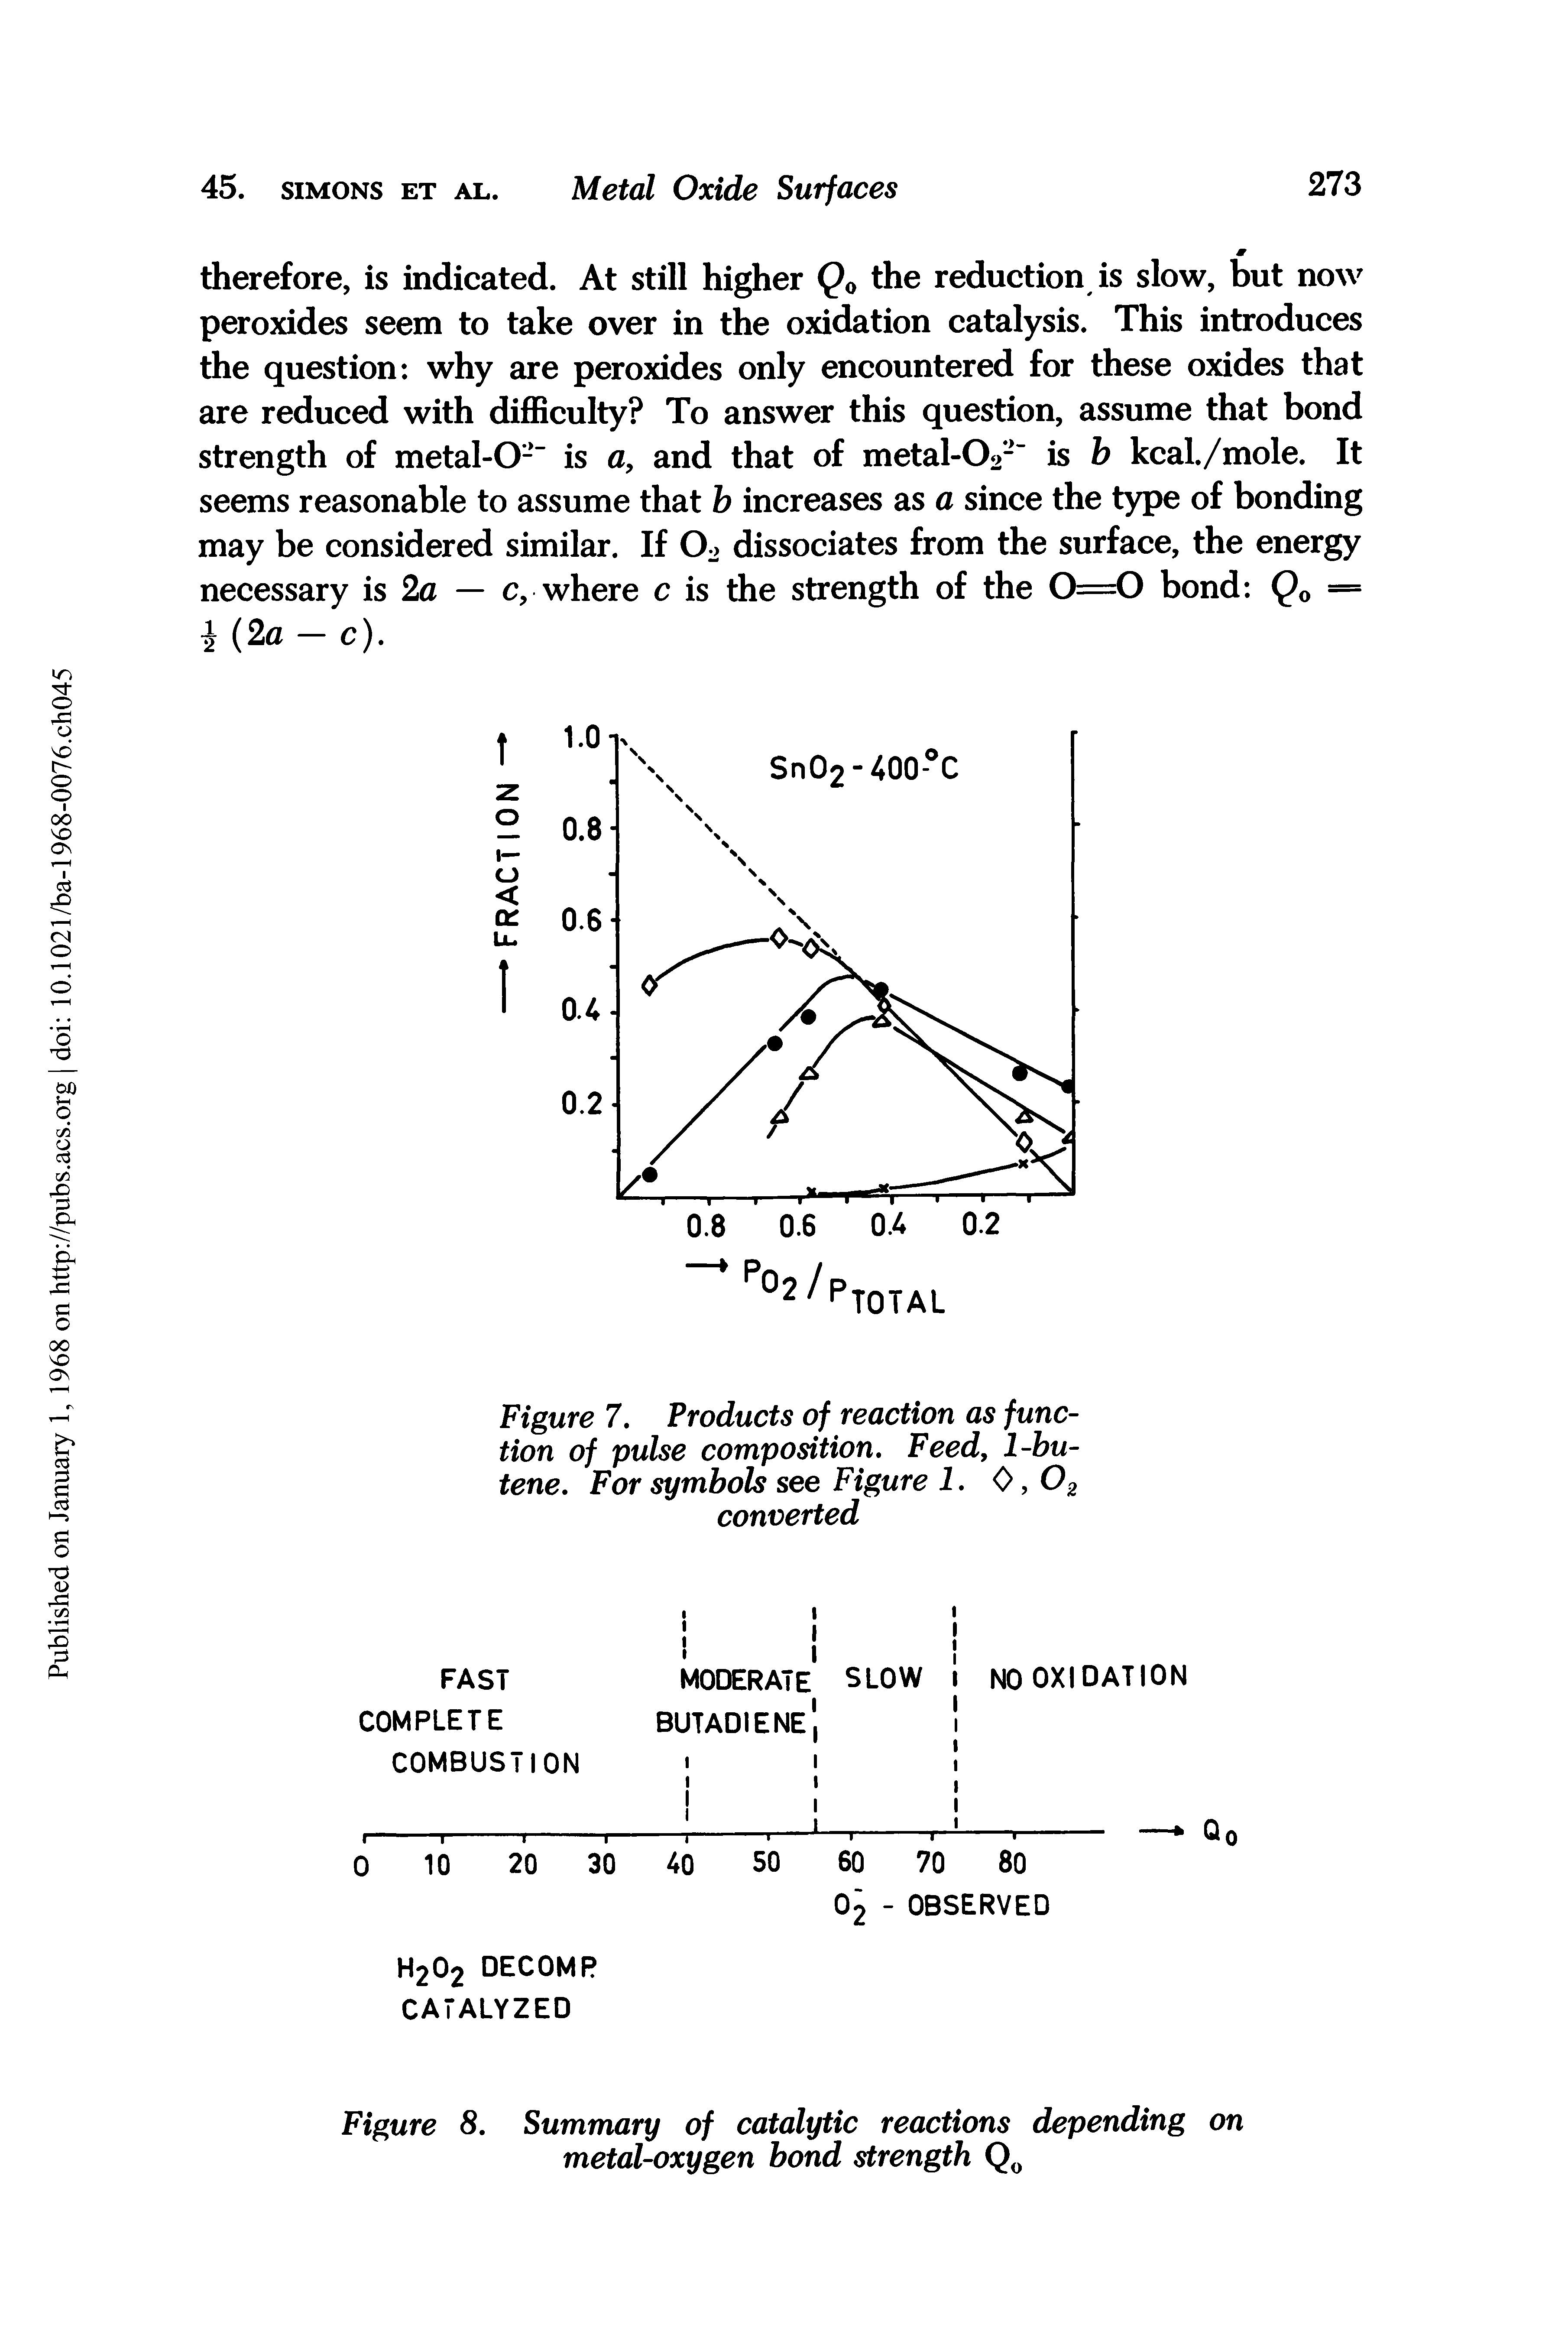 Figure 8. Summary of catalytic reactions depending on metal-oxygen bond strength Q0...